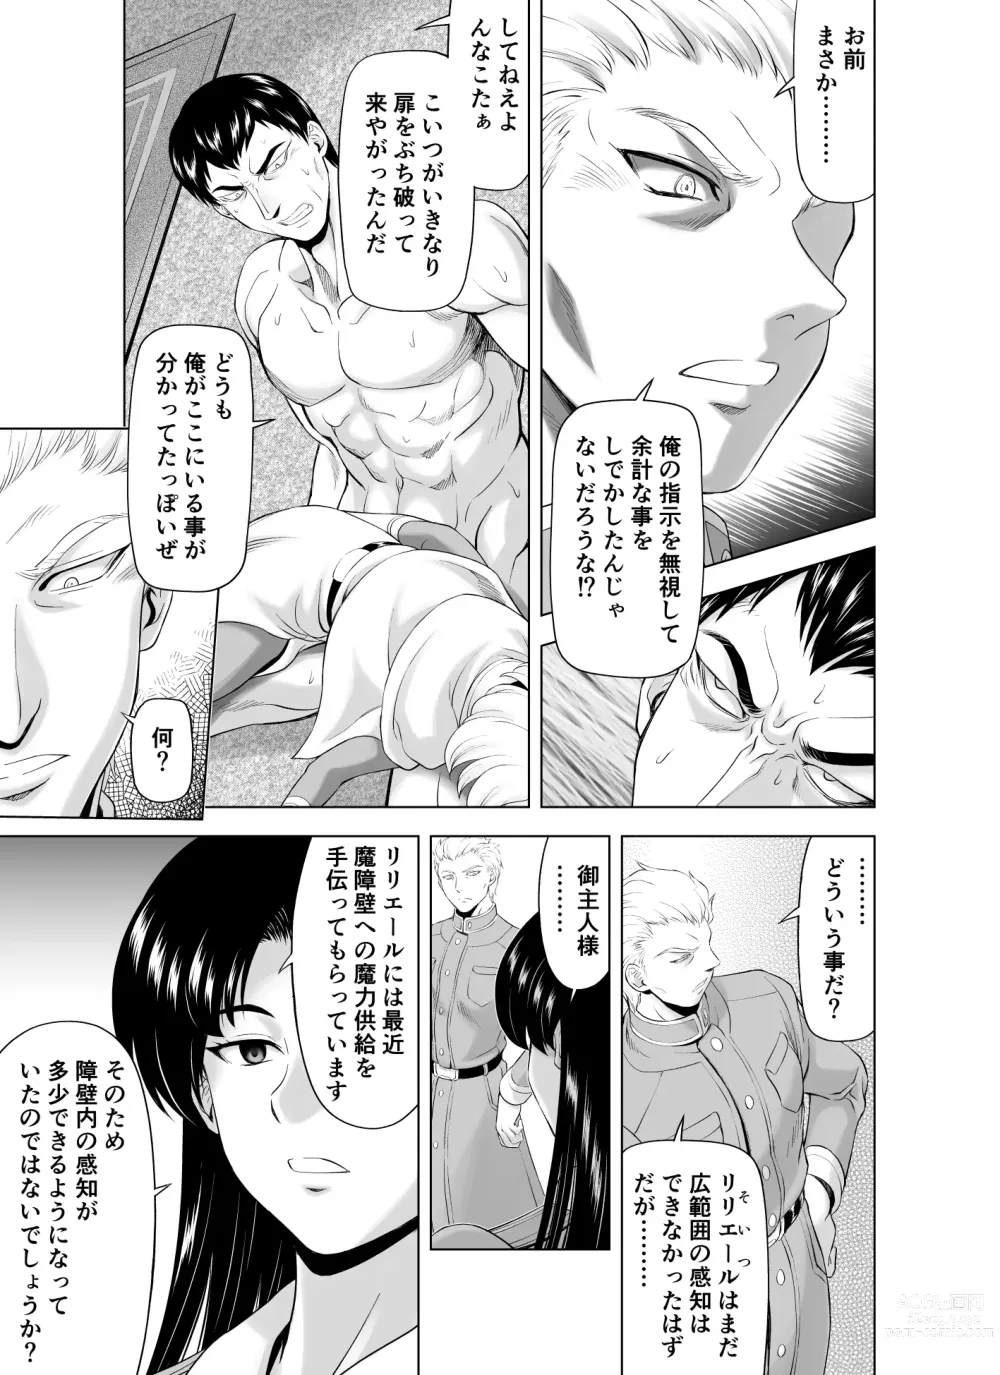 Page 21 of doujinshi Reties no Michibiki Vol. 9